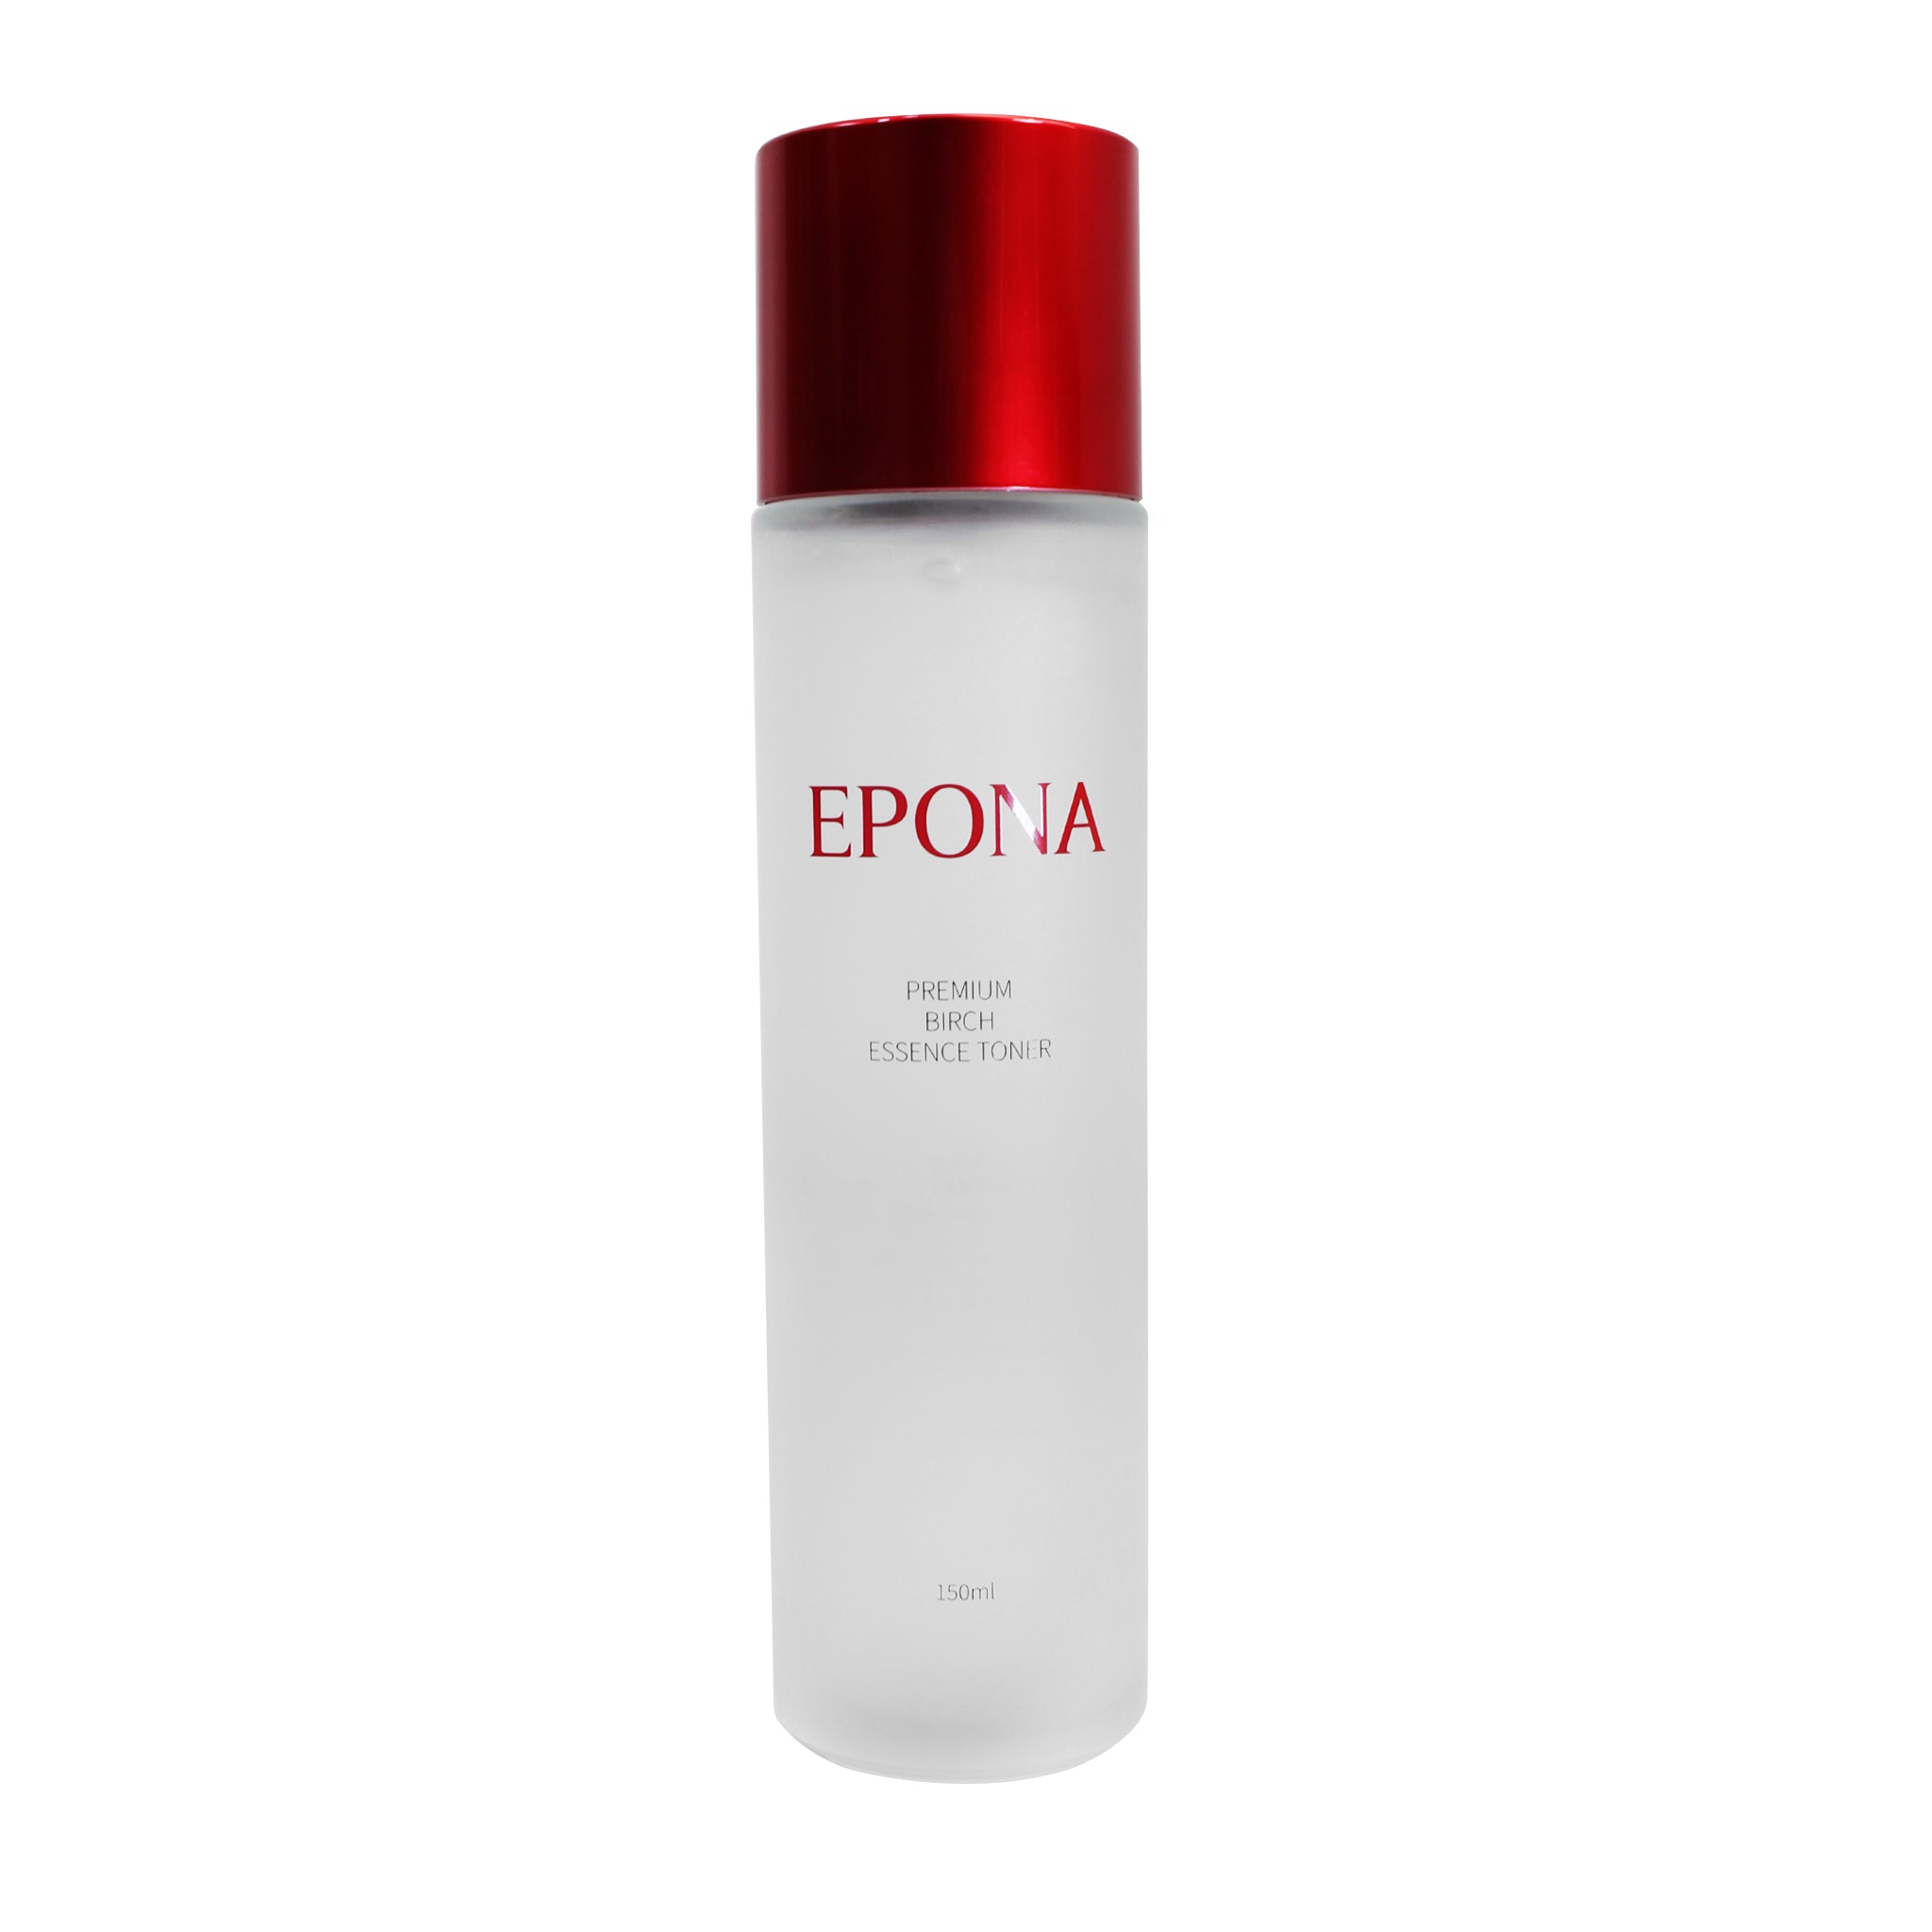 EPONA- Premium birch essence toner